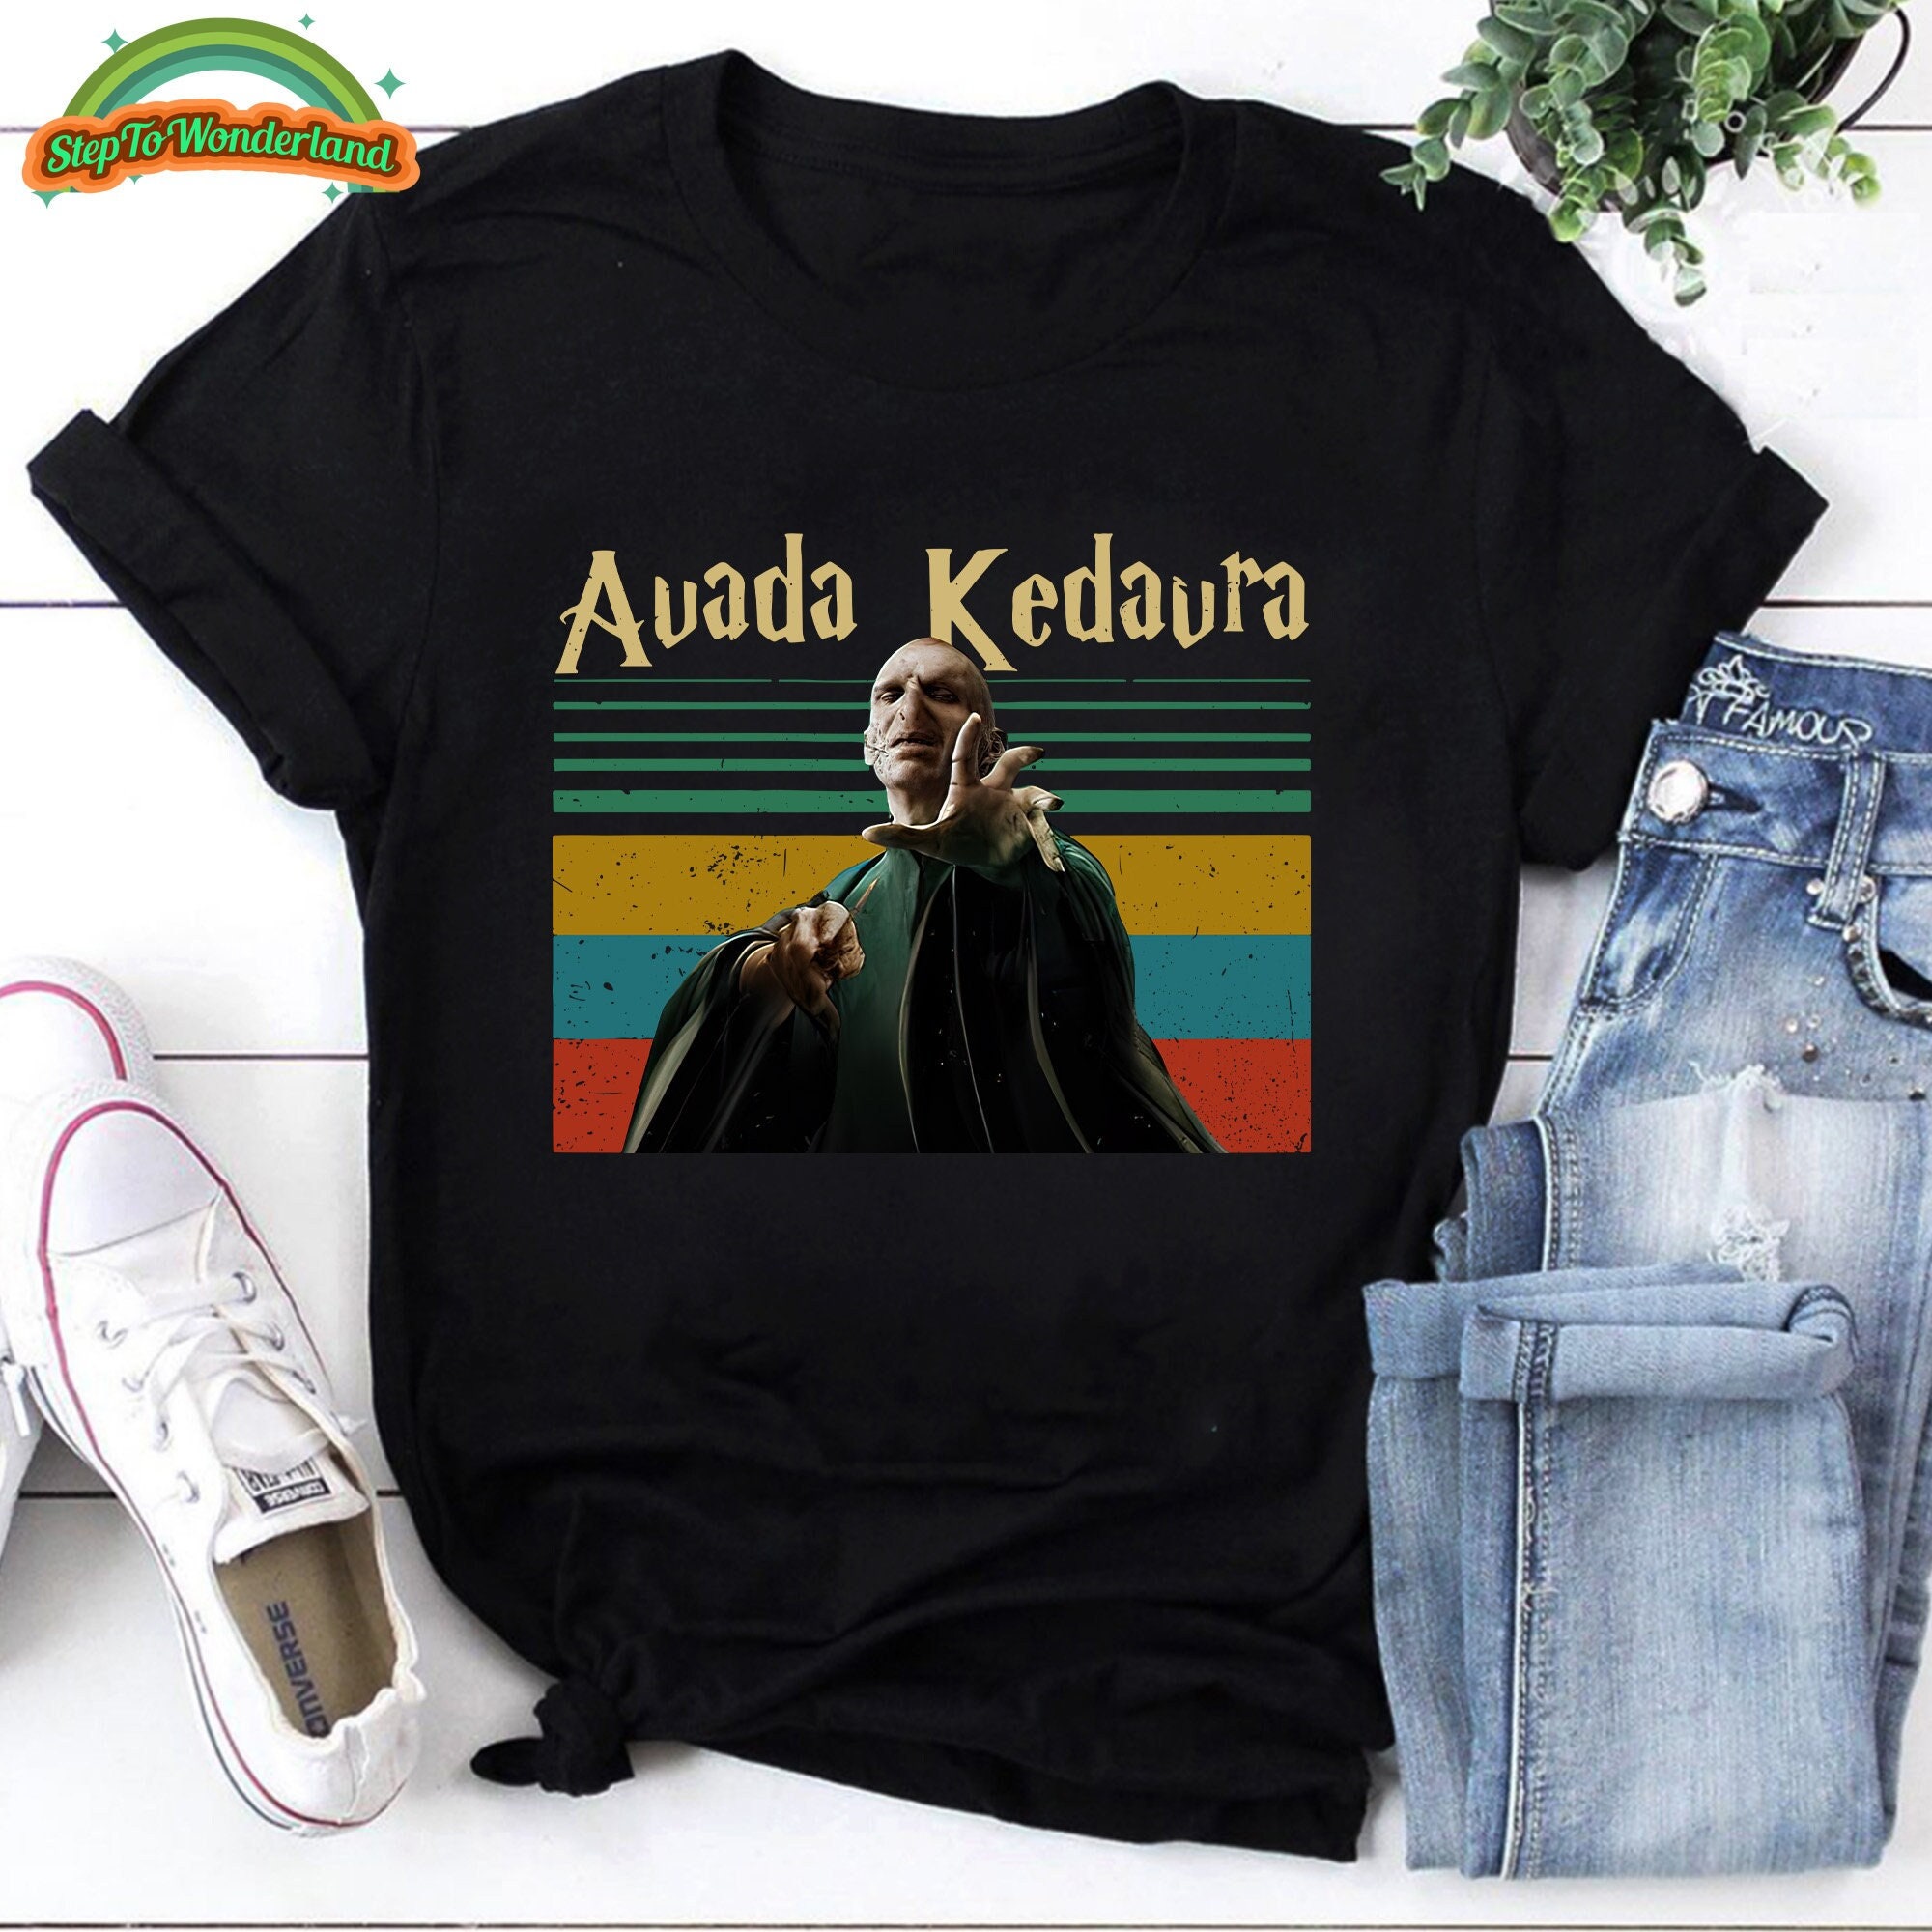 Lord Voldemort (Louis Vuitton Parody Tank) - Summer Of Fun - Skreened  T-shirts, Organic Shirts, Hoodies, Kids